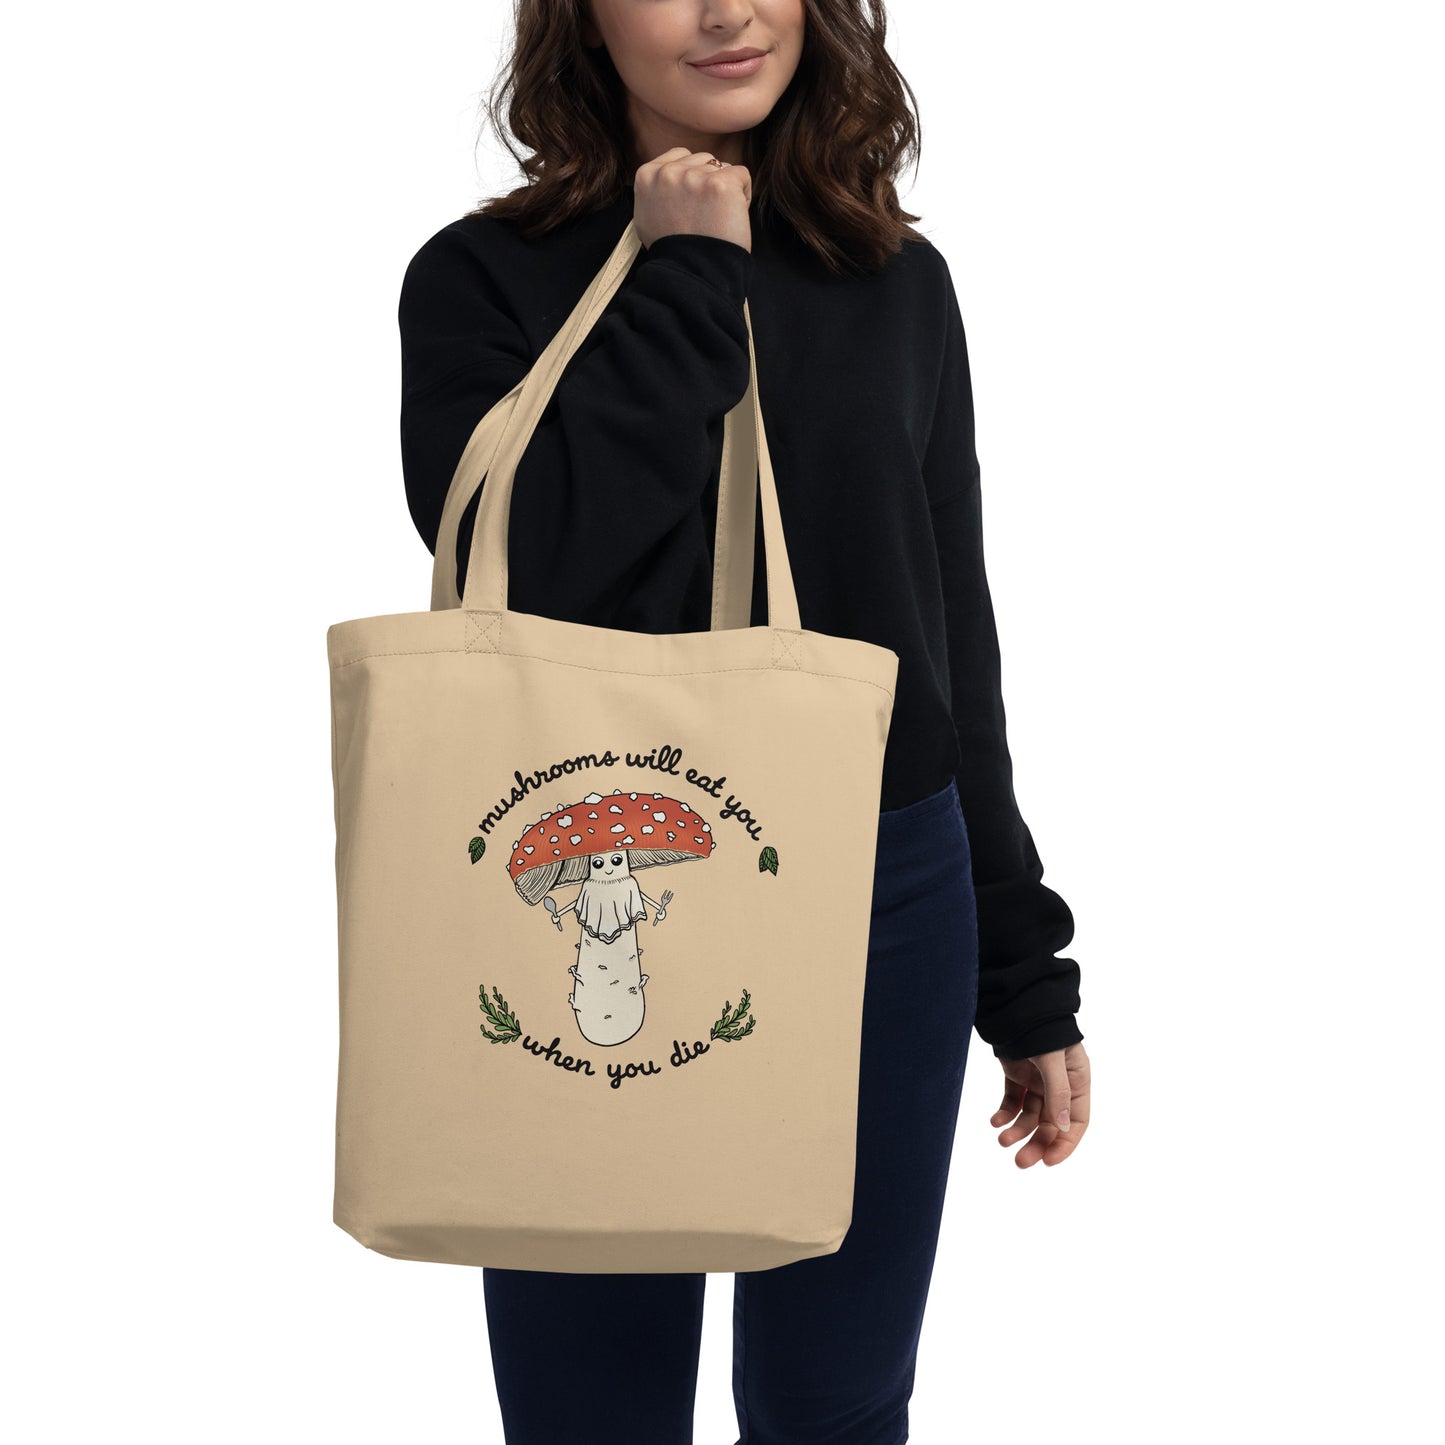 Mushrooms Will Eat You When You Die | Eco-Friendly Tote Bag | Funny Mushroom Artwork